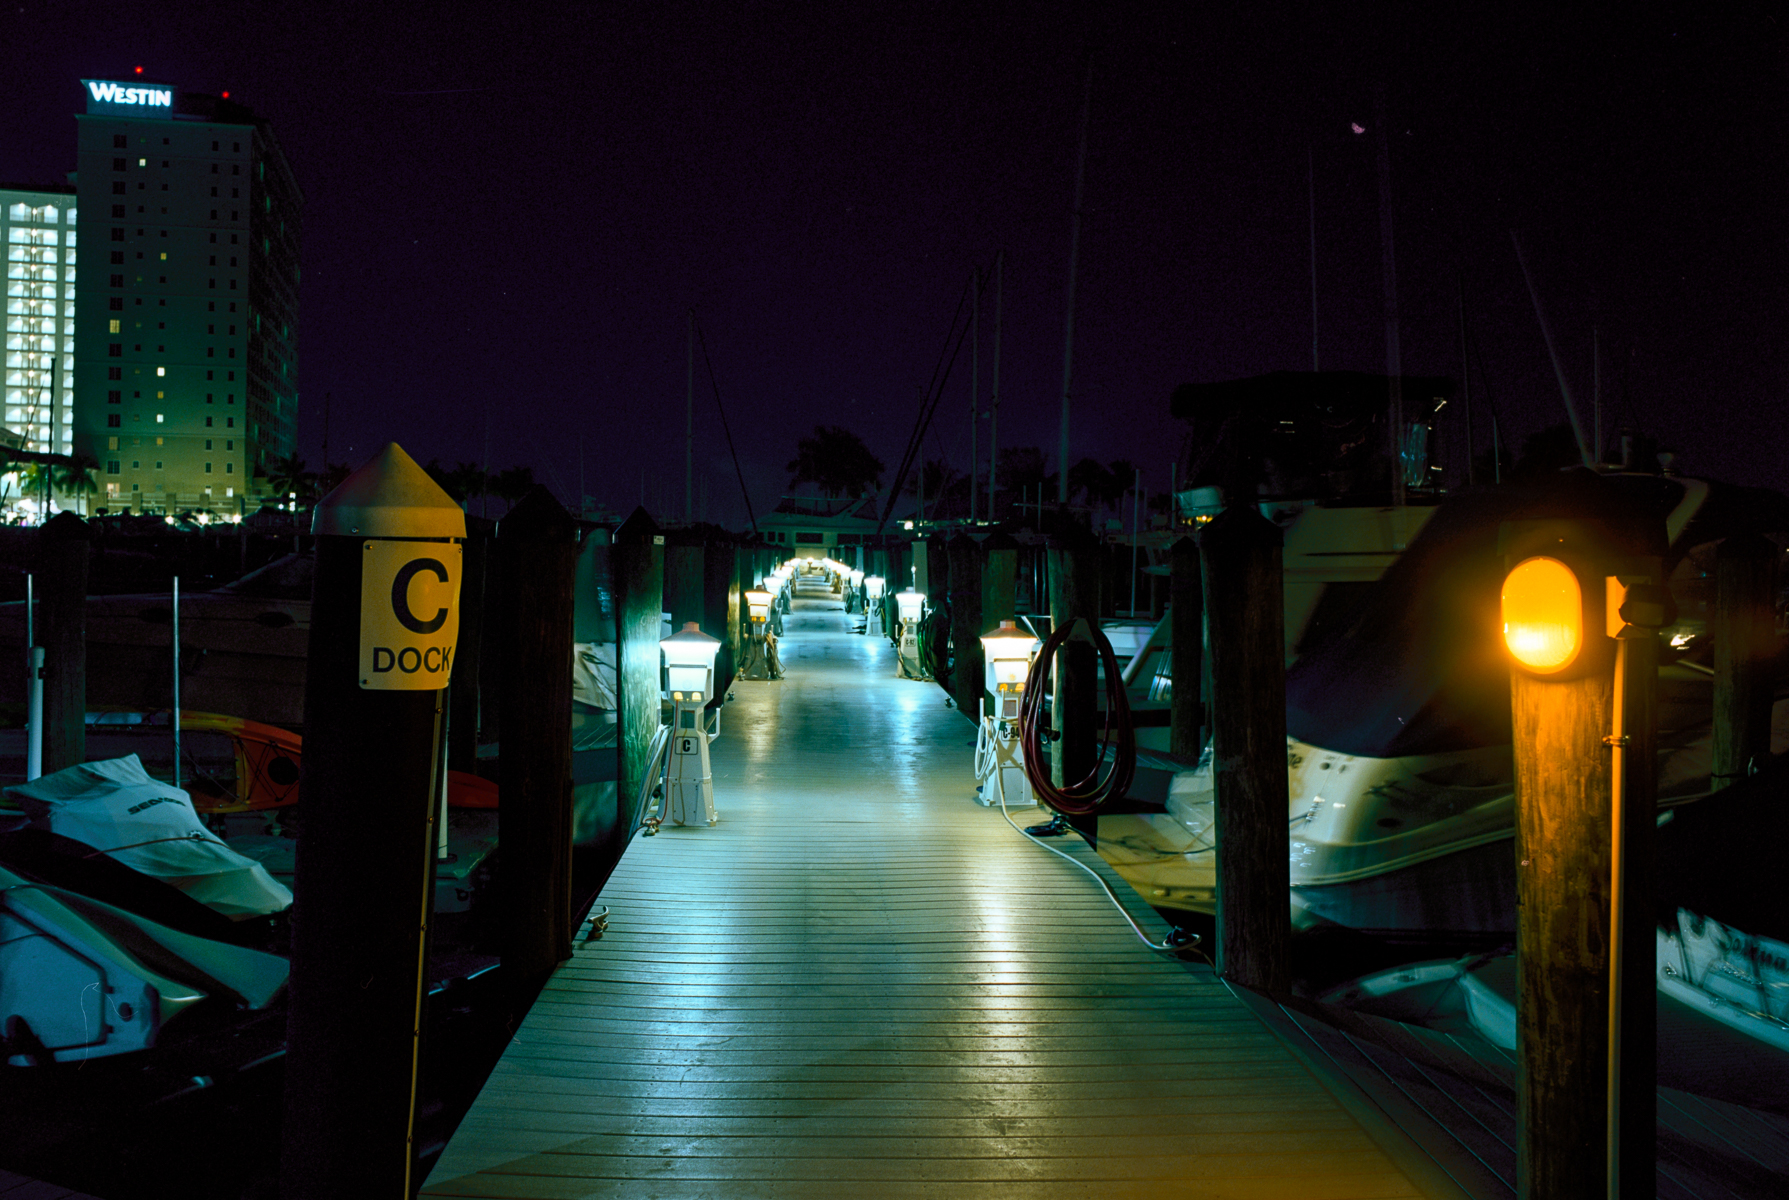 Robert Rogers | Dock C at Night | Mamiya 645 Pro TL | 45mm lens 1 min 8sec @ f-16 | Kodak Ektar 100